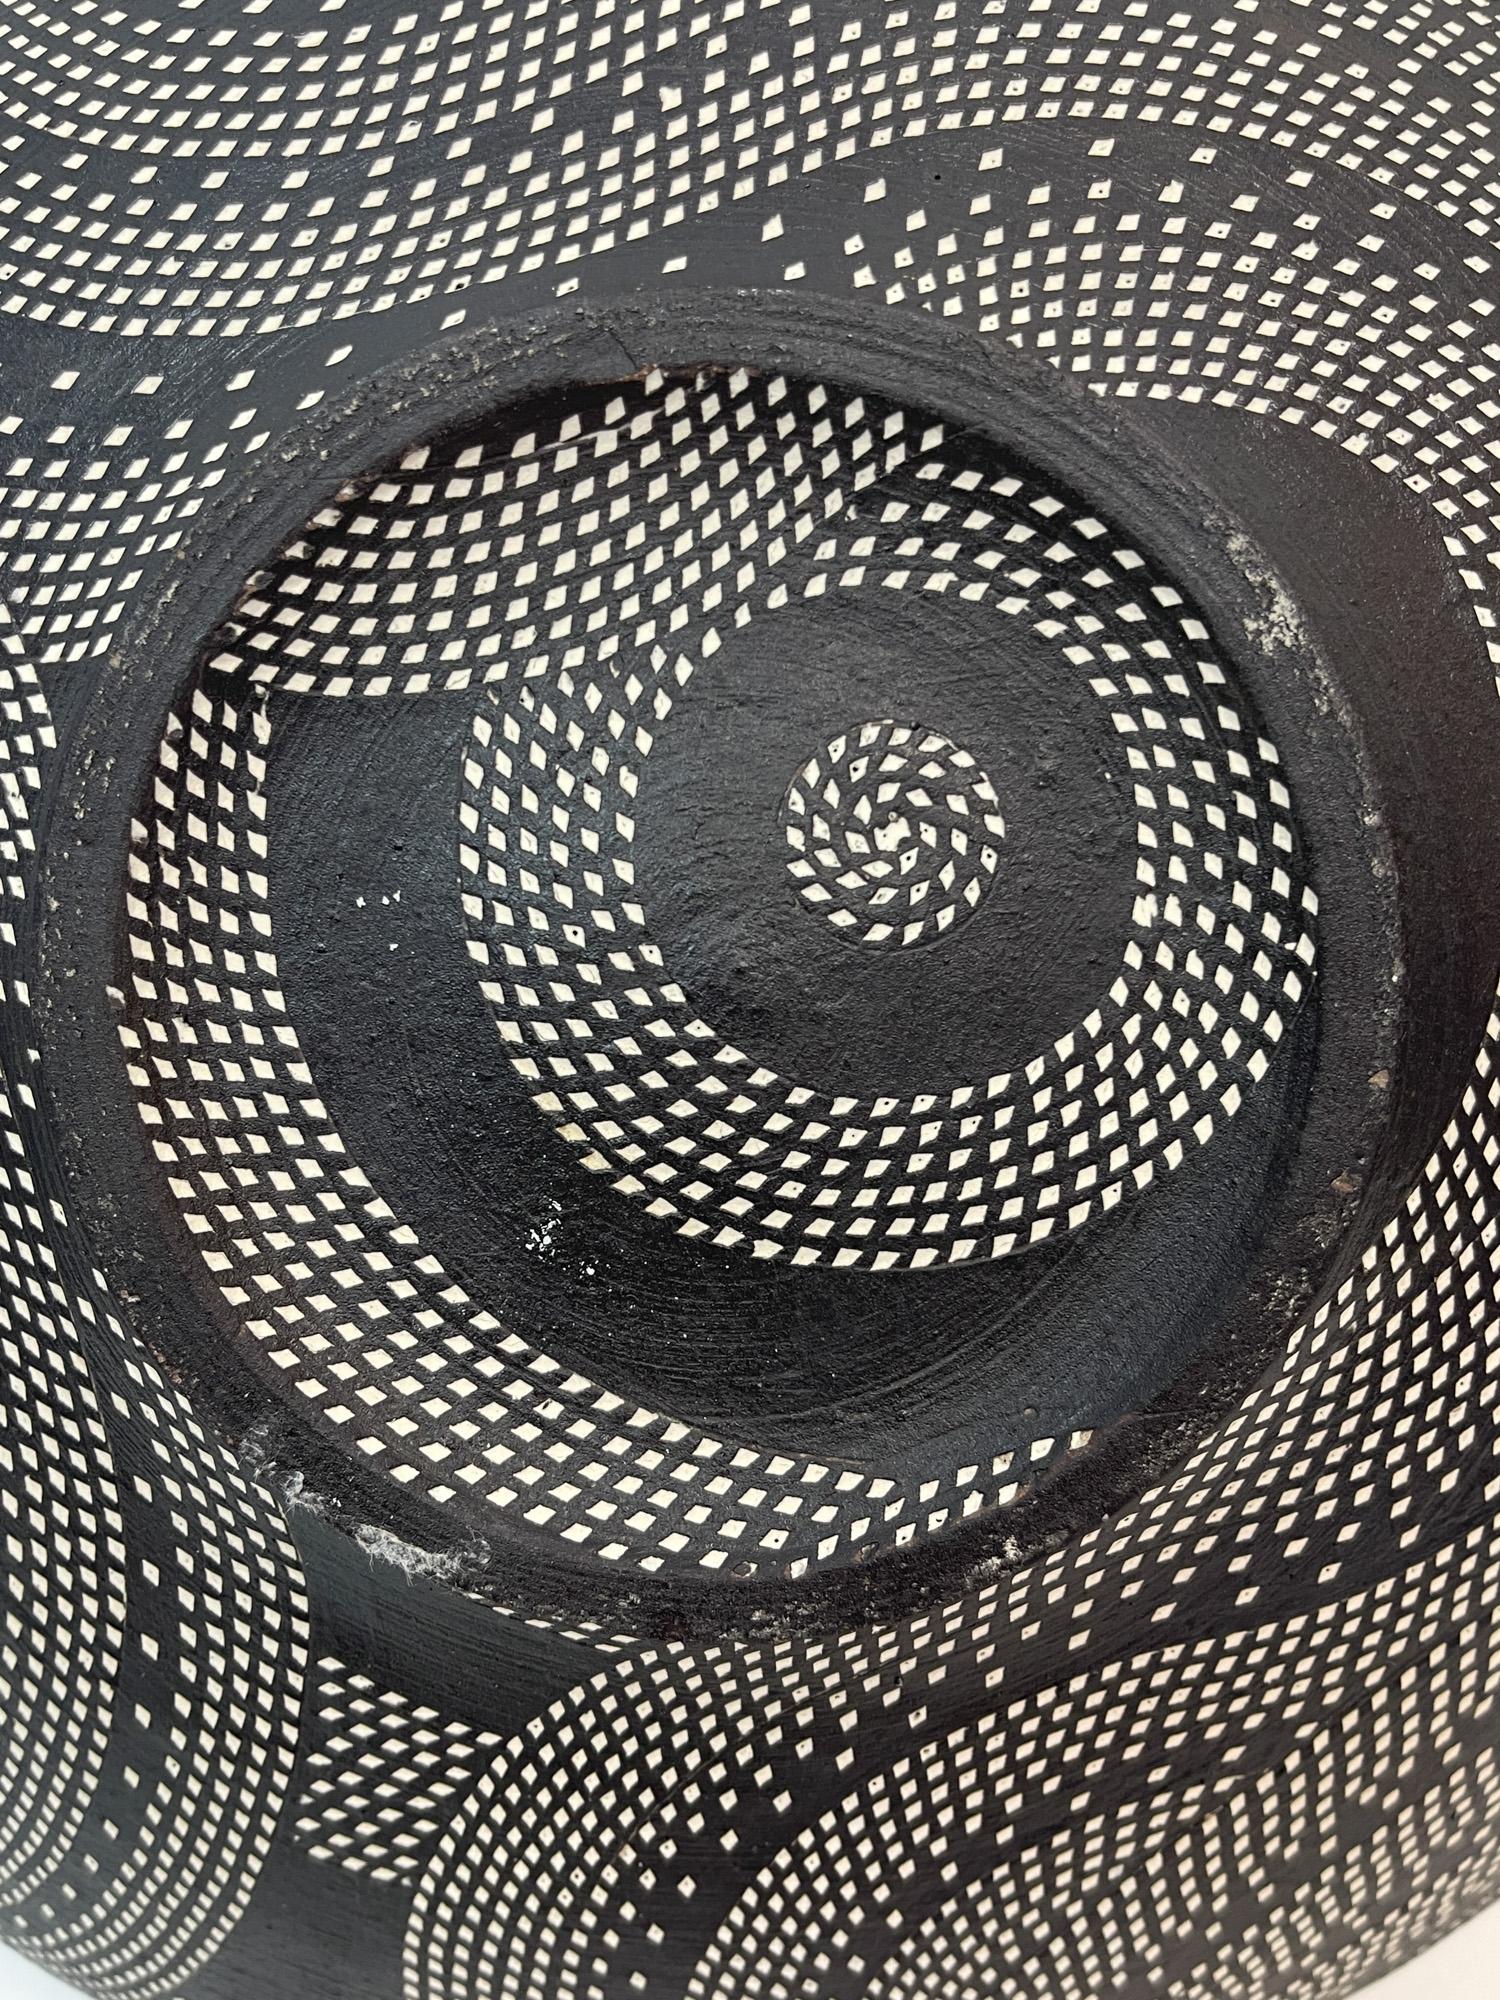 KITAMURA JUNKO (b. 1956)
Cone Vase, c. 1993
Stoneware, black slip, inlay, with signed tomobako
4.5 x 10 inches 
With artist signed tomobako

Kitamura Junko studied with Kondo Yutaka (1932-1983) and Sodeisha Founder Suzuki Osamu (1926 - 2001) at the